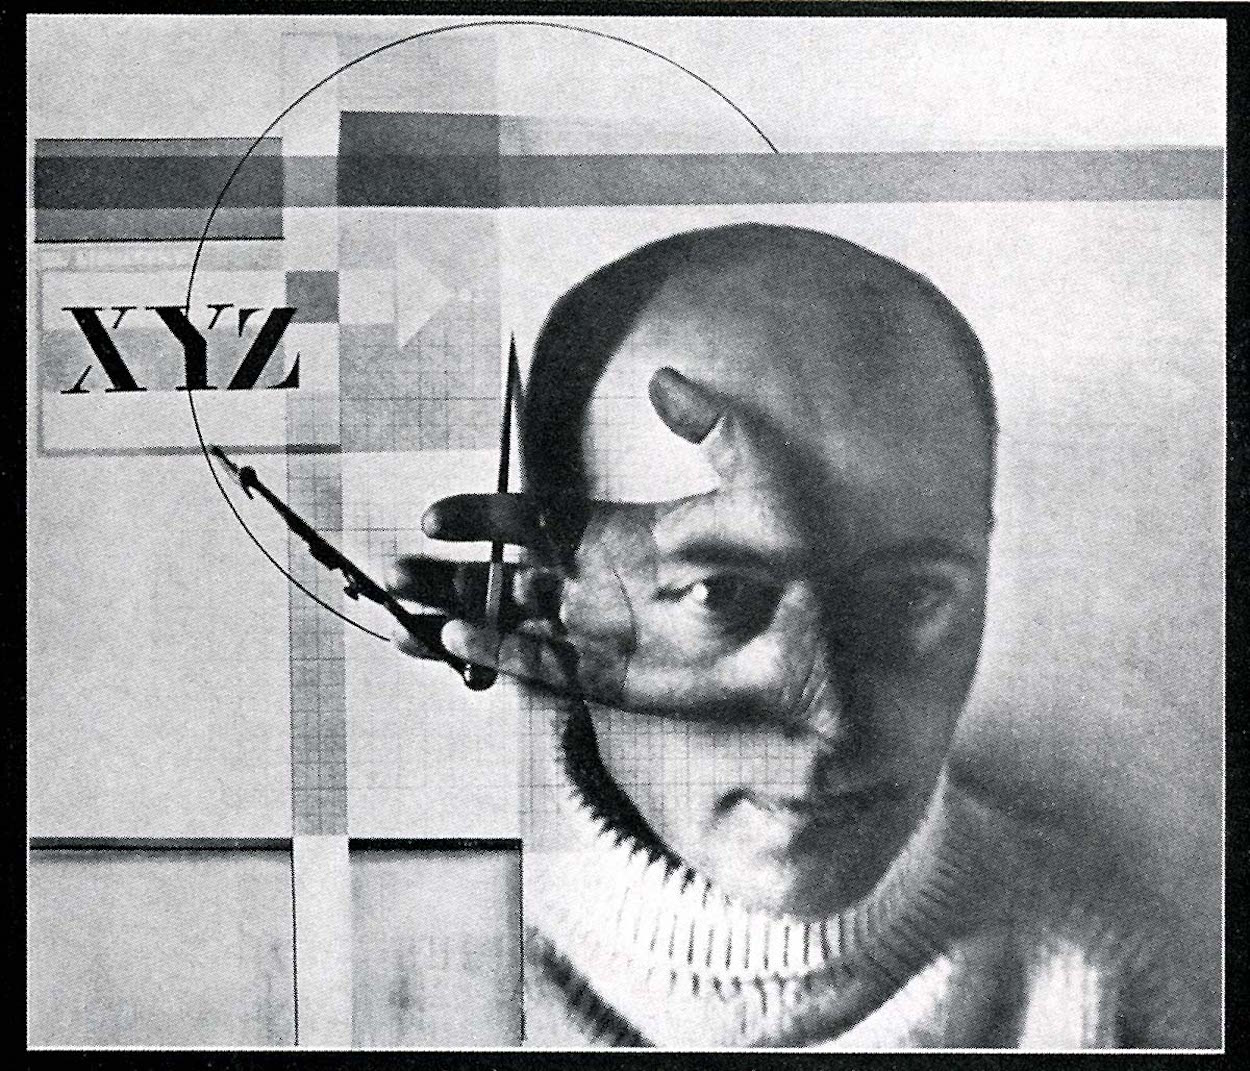 El Lissitzky - 23 de noviembre de 1890 - 30 de diciembre de 1941